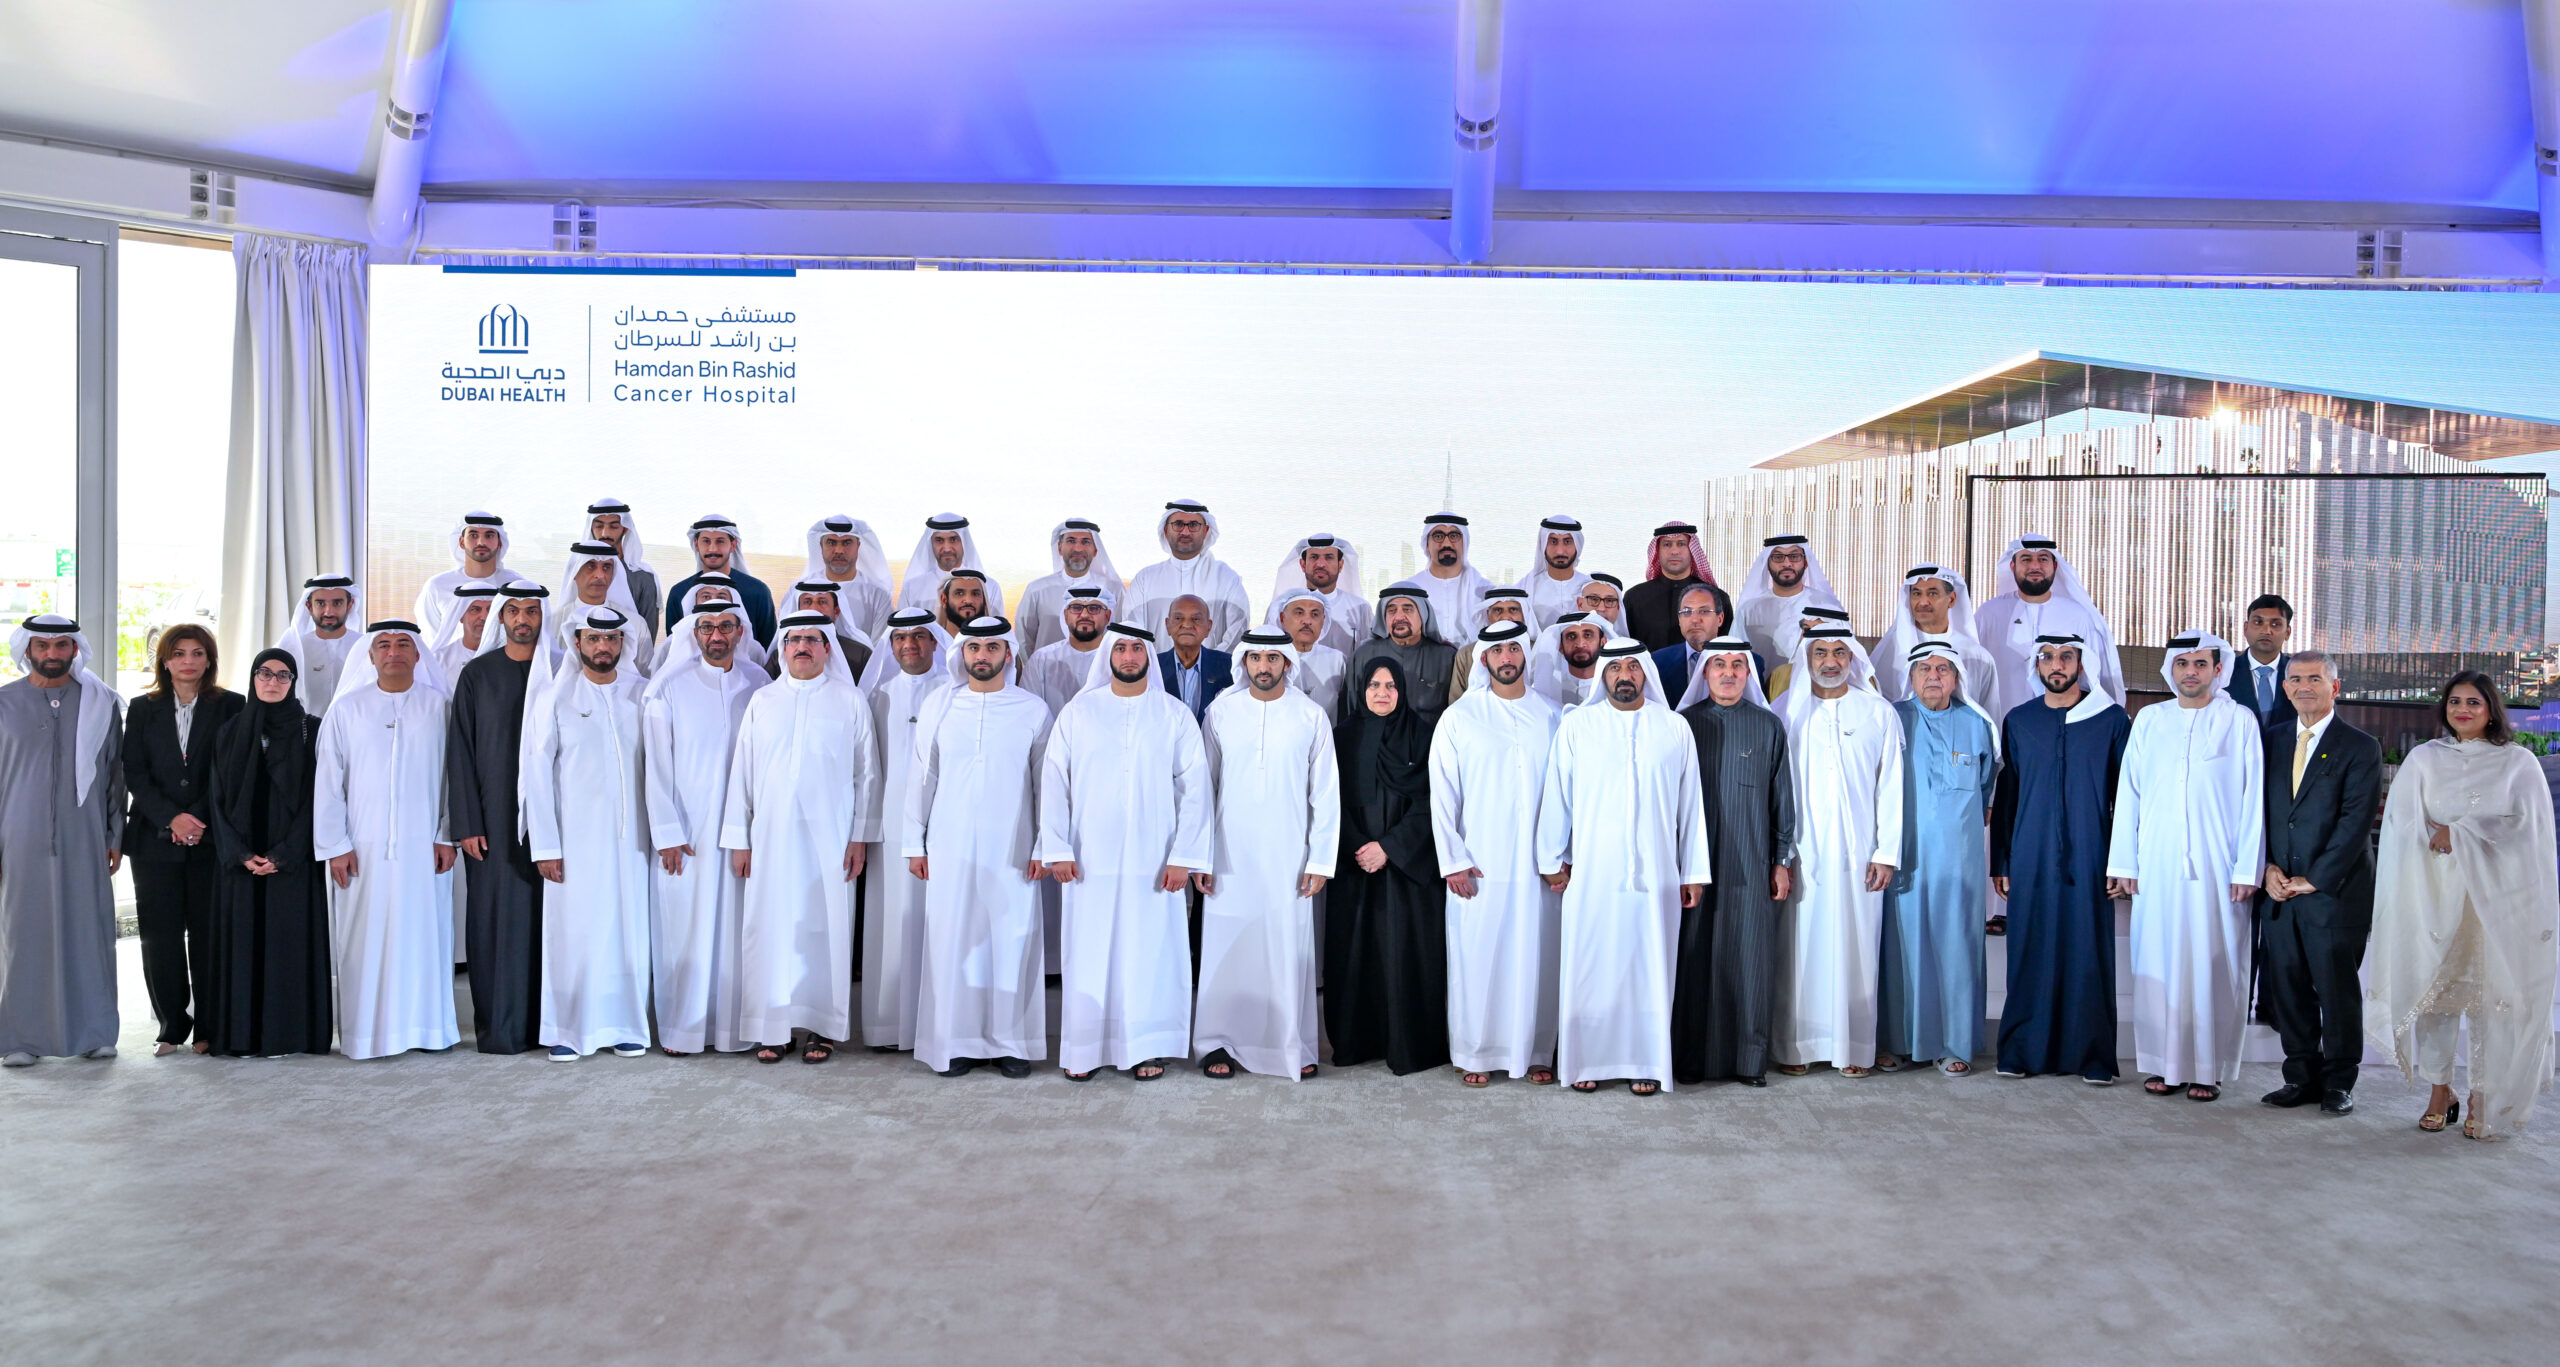 Hamdan bin Mohammed attends ceremony showcasing design of the Hamdan Bin Rashid Cancer Hospital